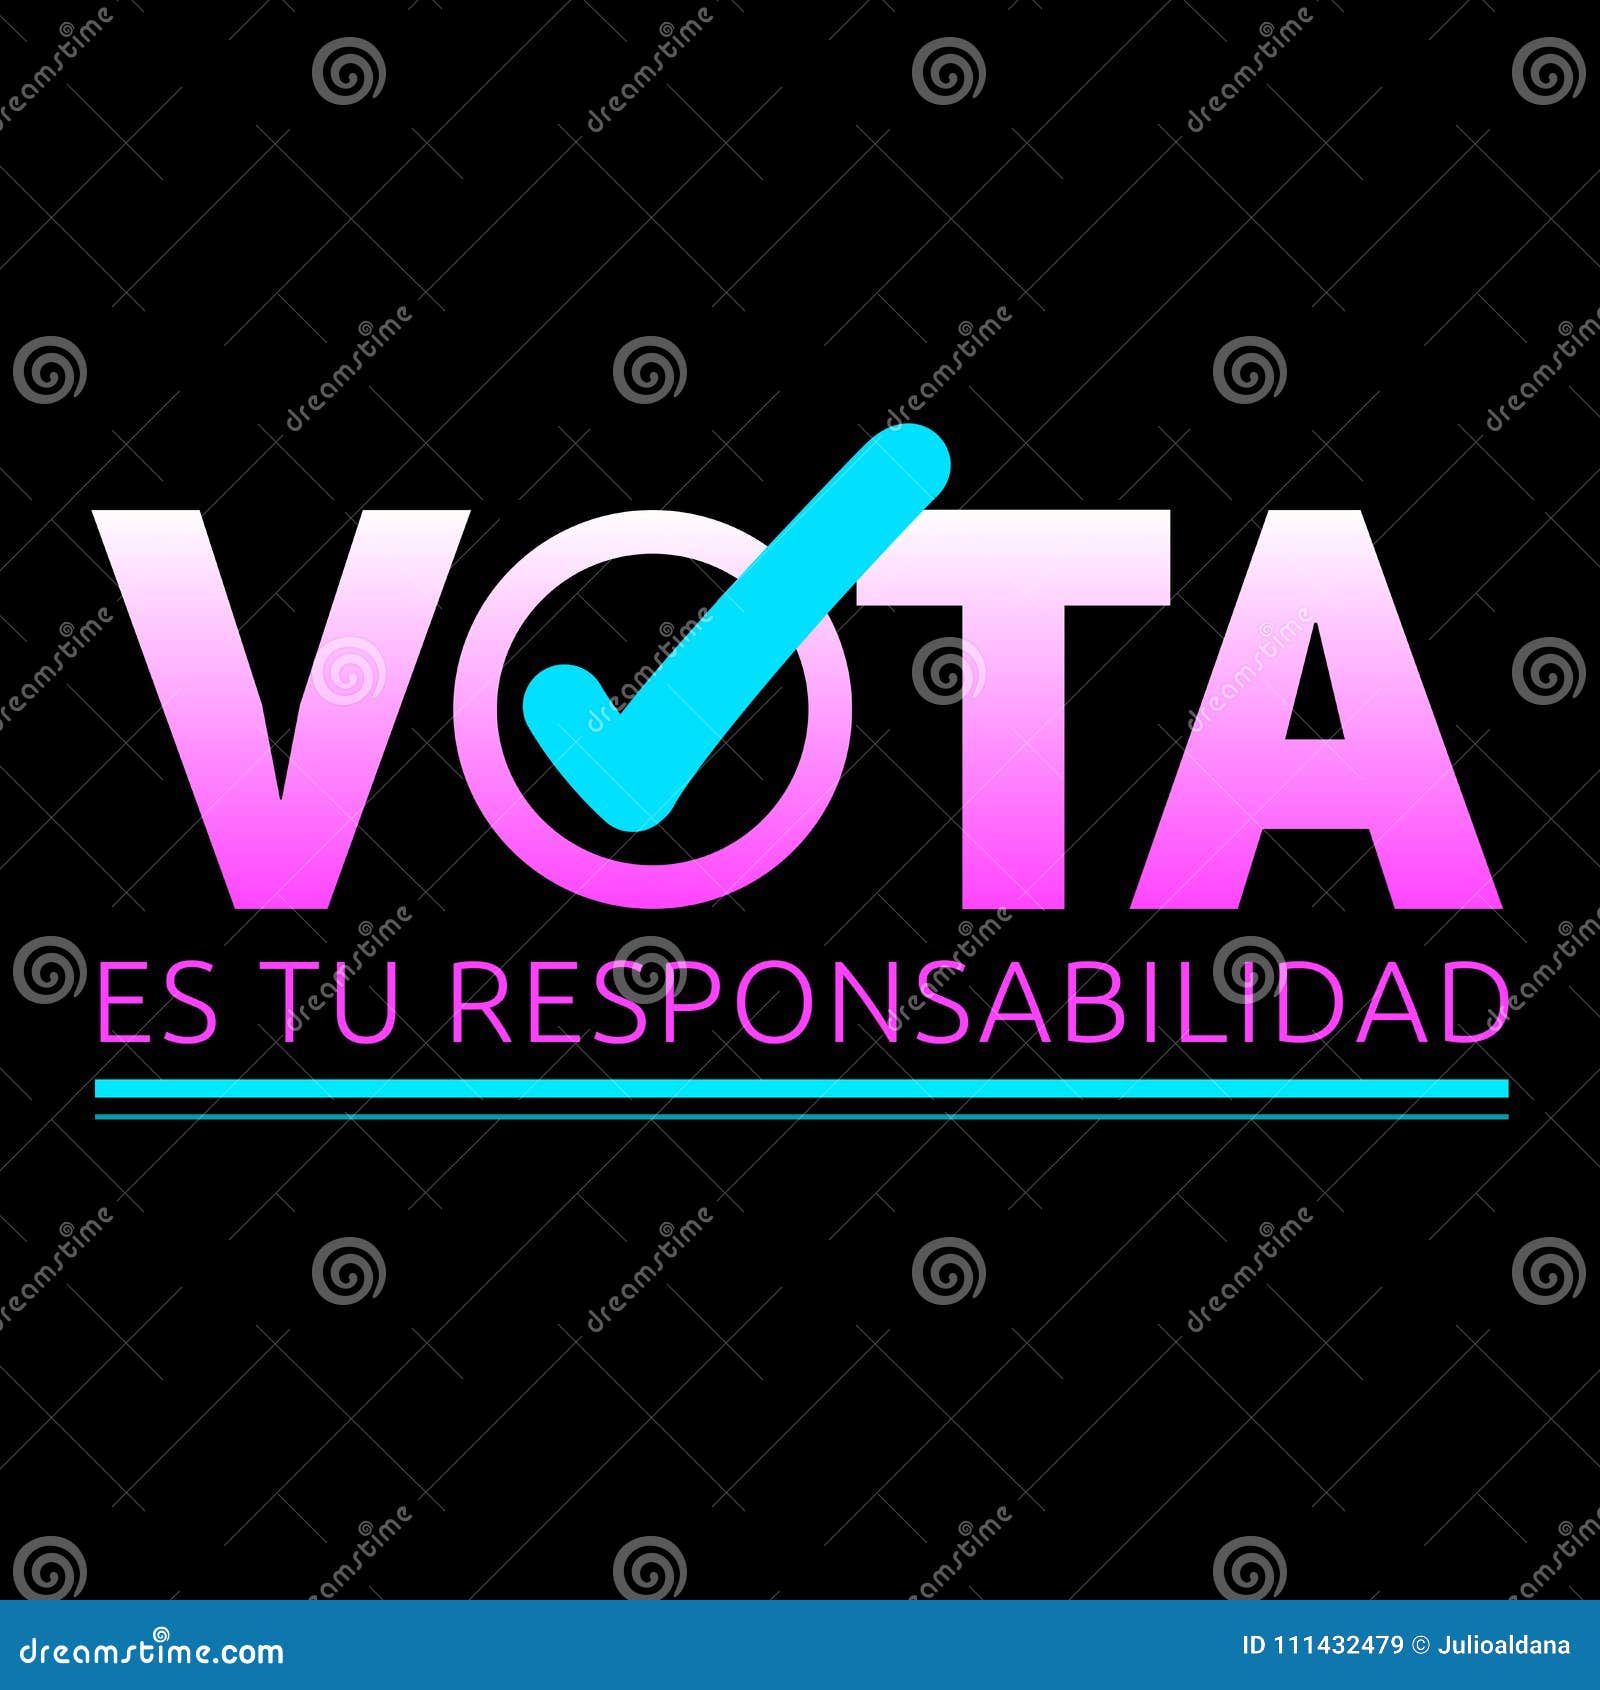 vota es tu responsabilidad, vote is your responsibility spanish text